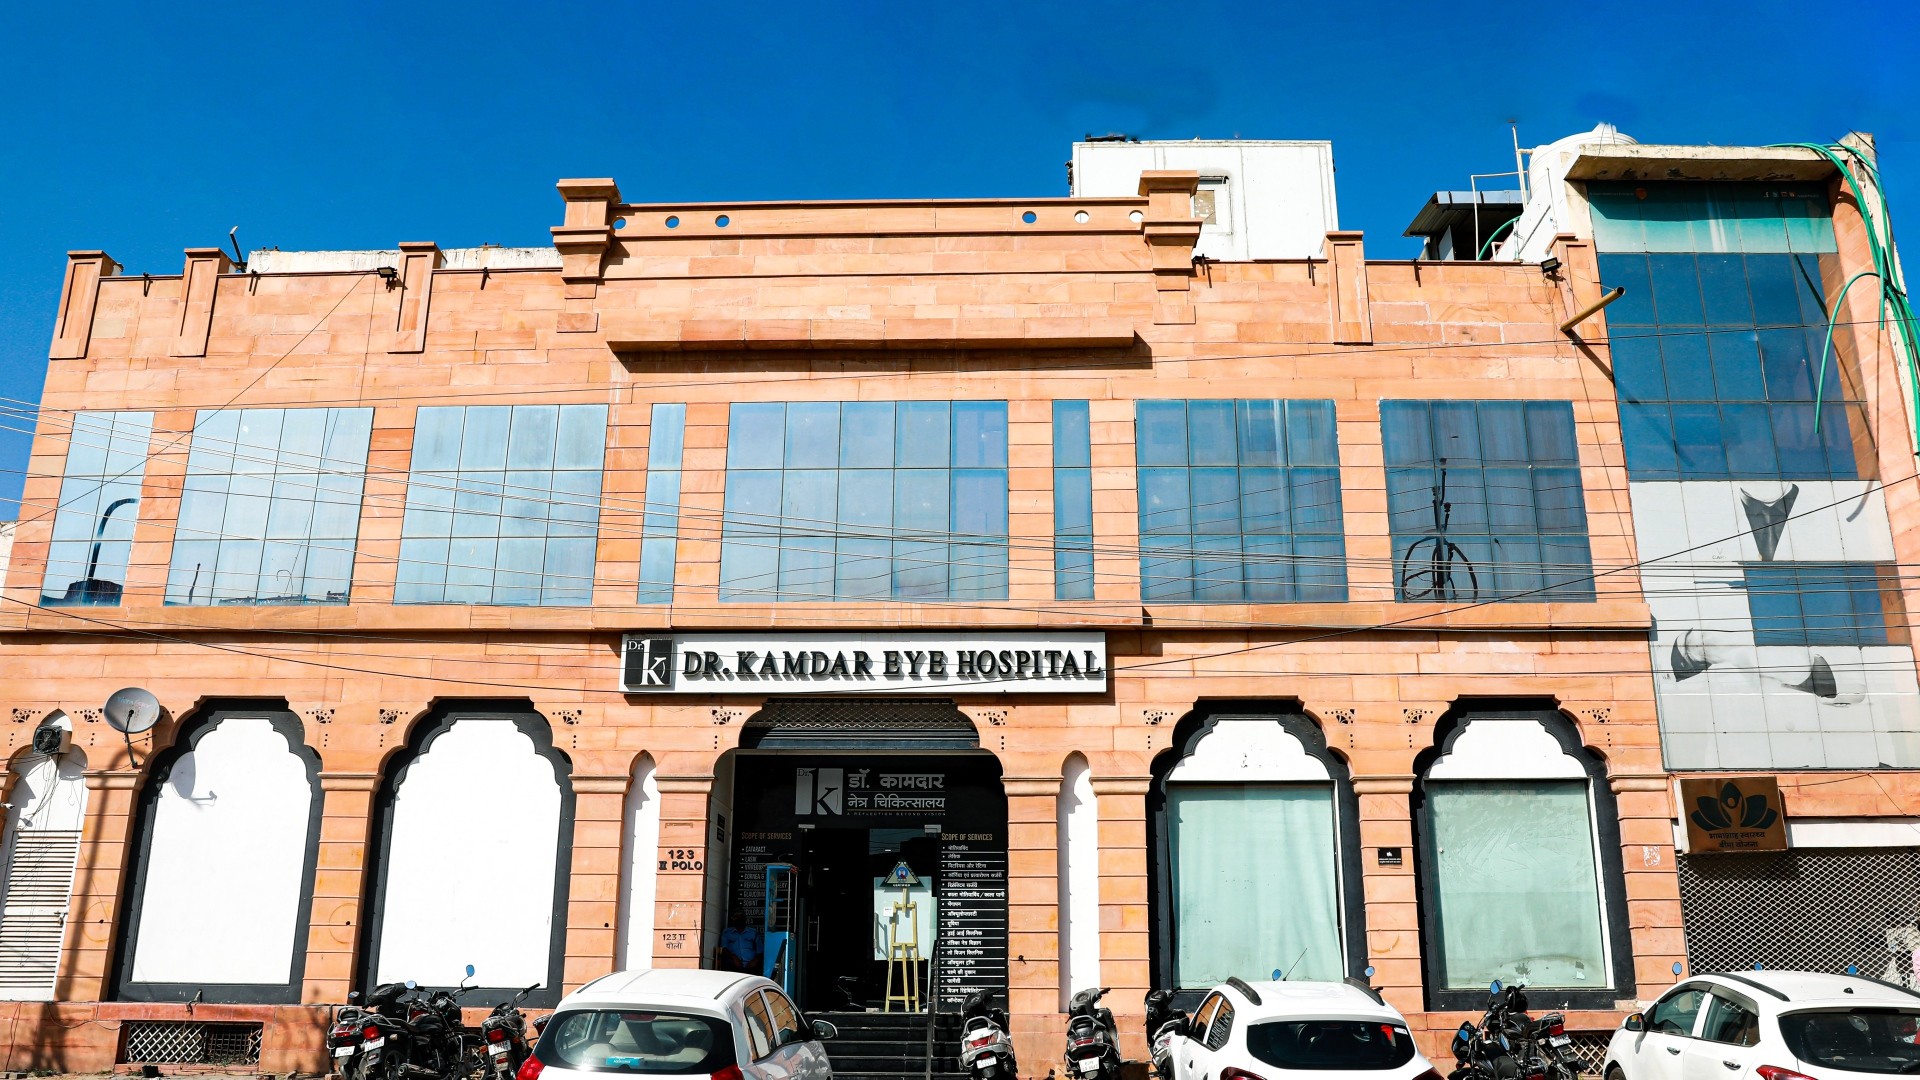 Dr. Kamdar Eye Hospital